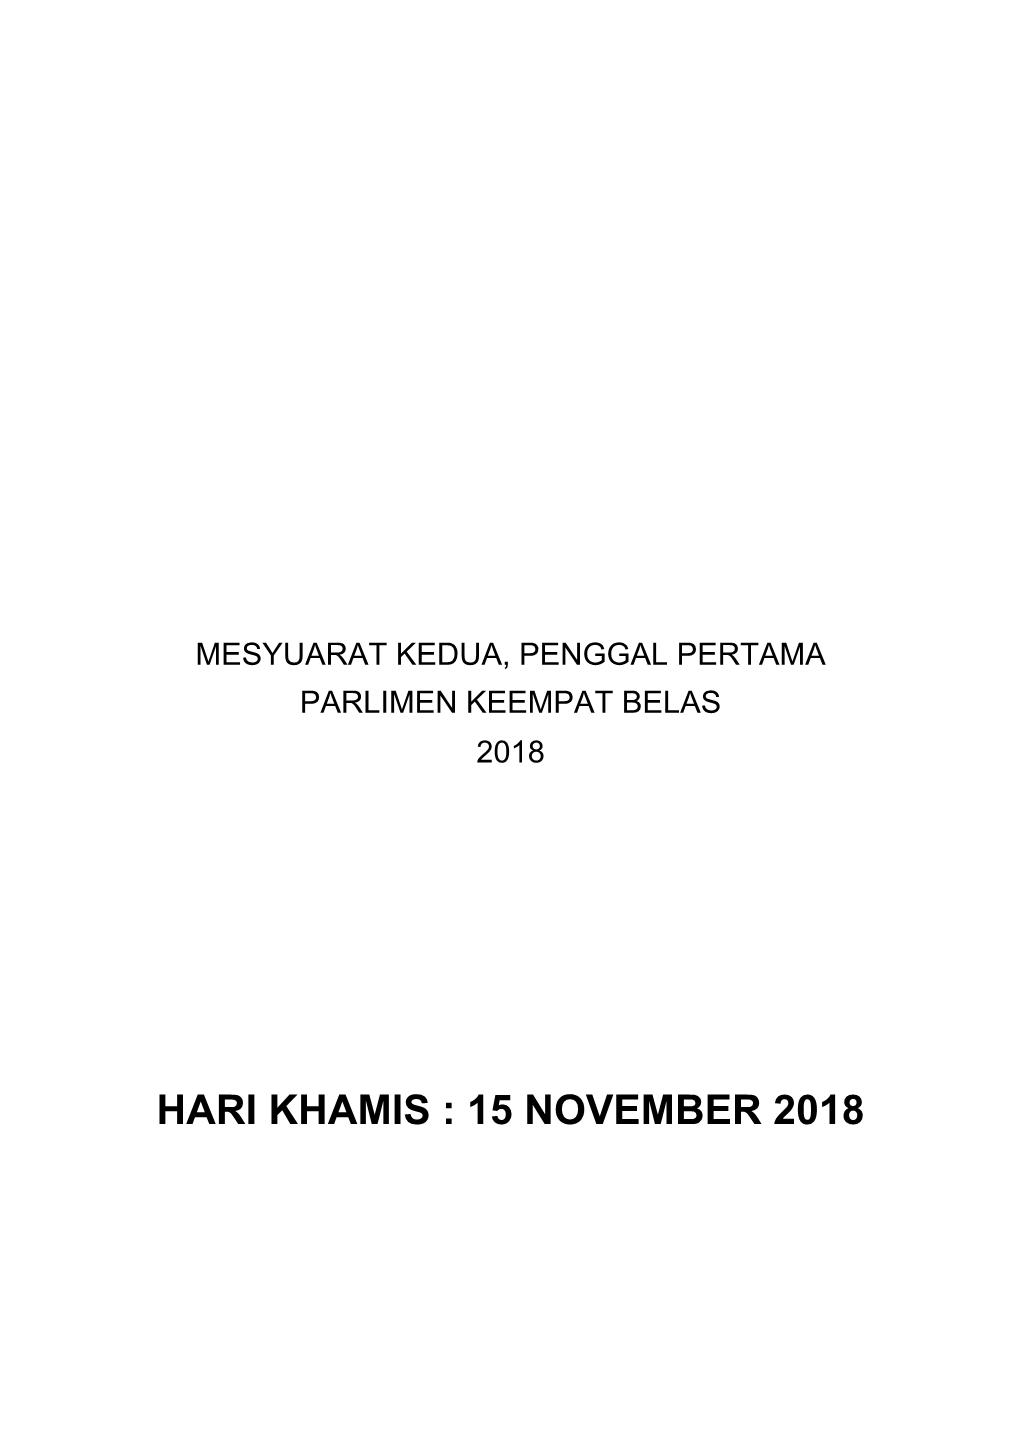 Hari Khamis : 15 November 2018 No